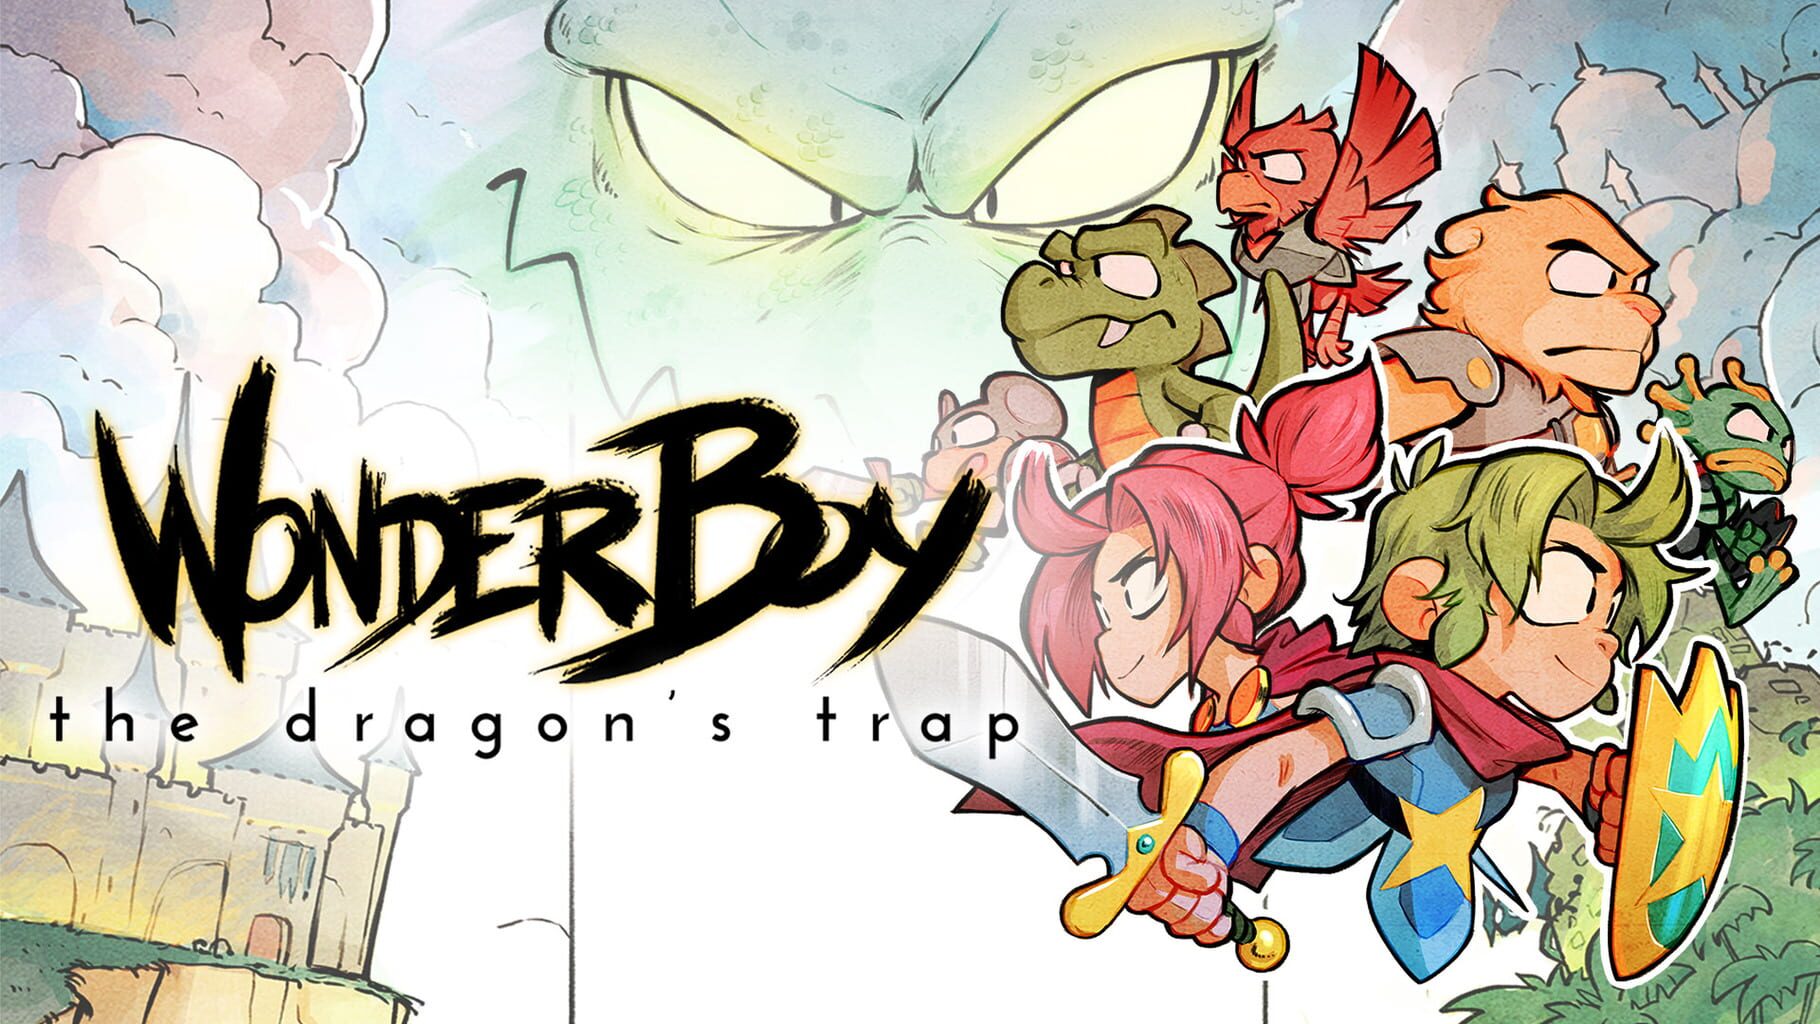 Artwork for Wonder Boy: The Dragon's Trap